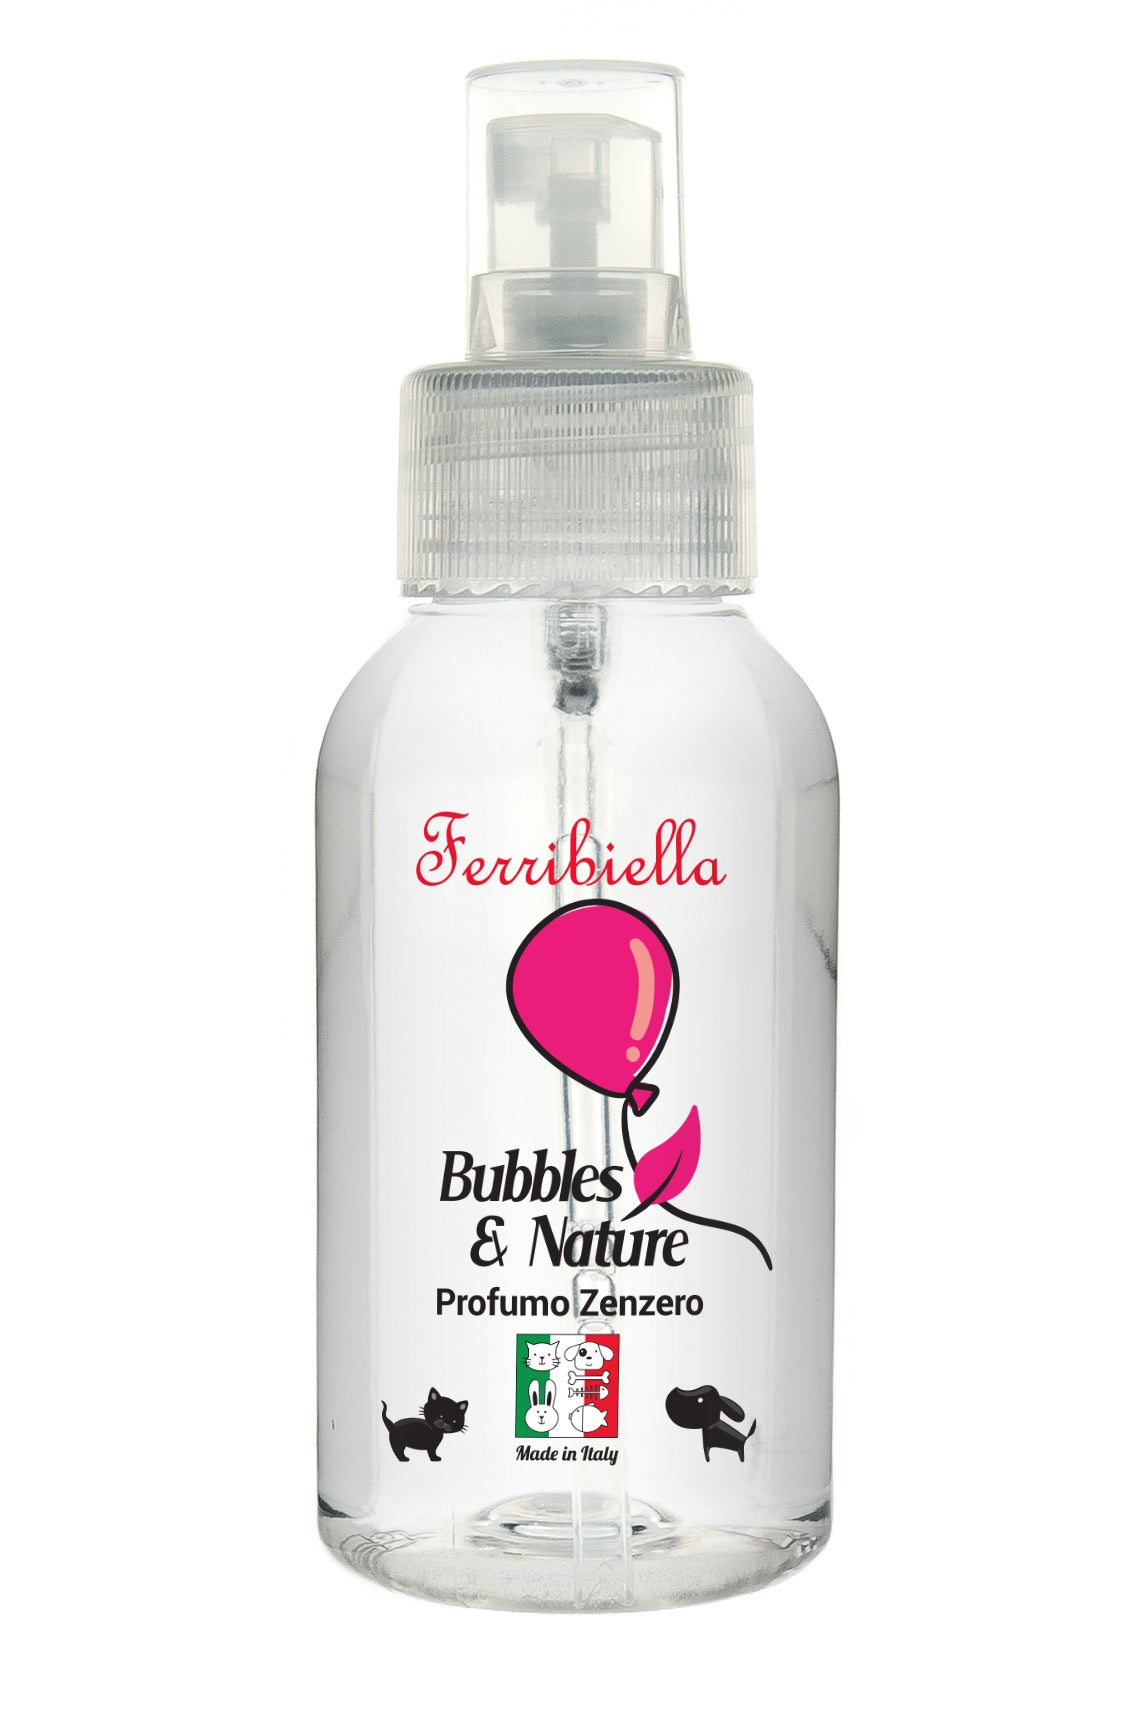 Bubble & Nature Parfum për qen, Ferribiella,100ml.